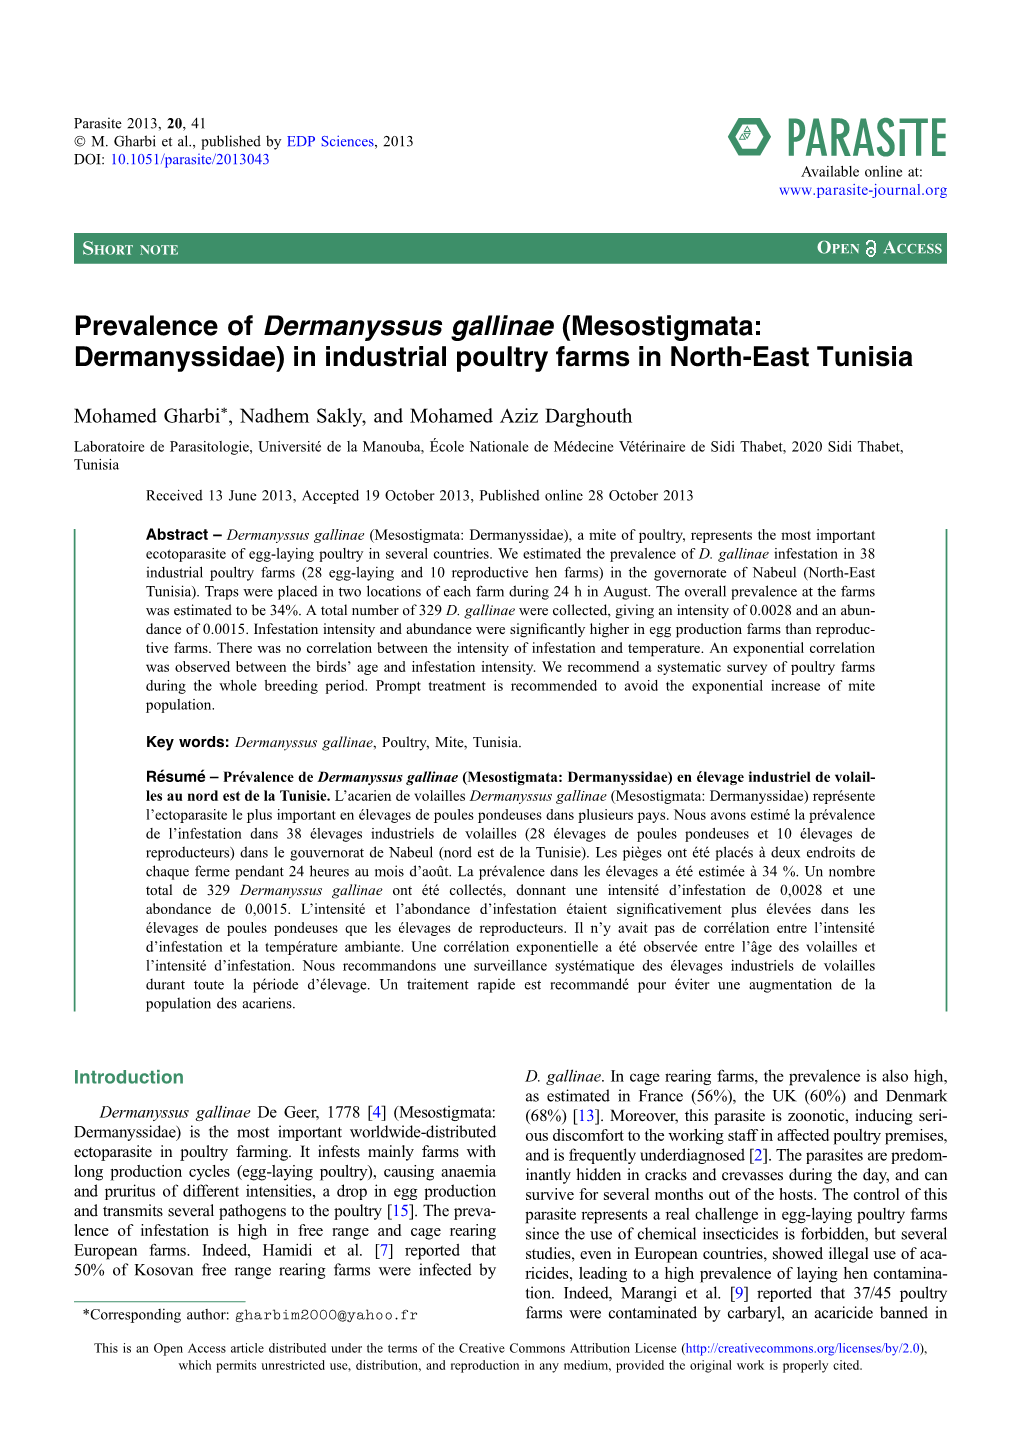 Prevalence of Dermanyssus Gallinae (Mesostigmata: Dermanyssidae) in Industrial Poultry Farms in North-East Tunisia